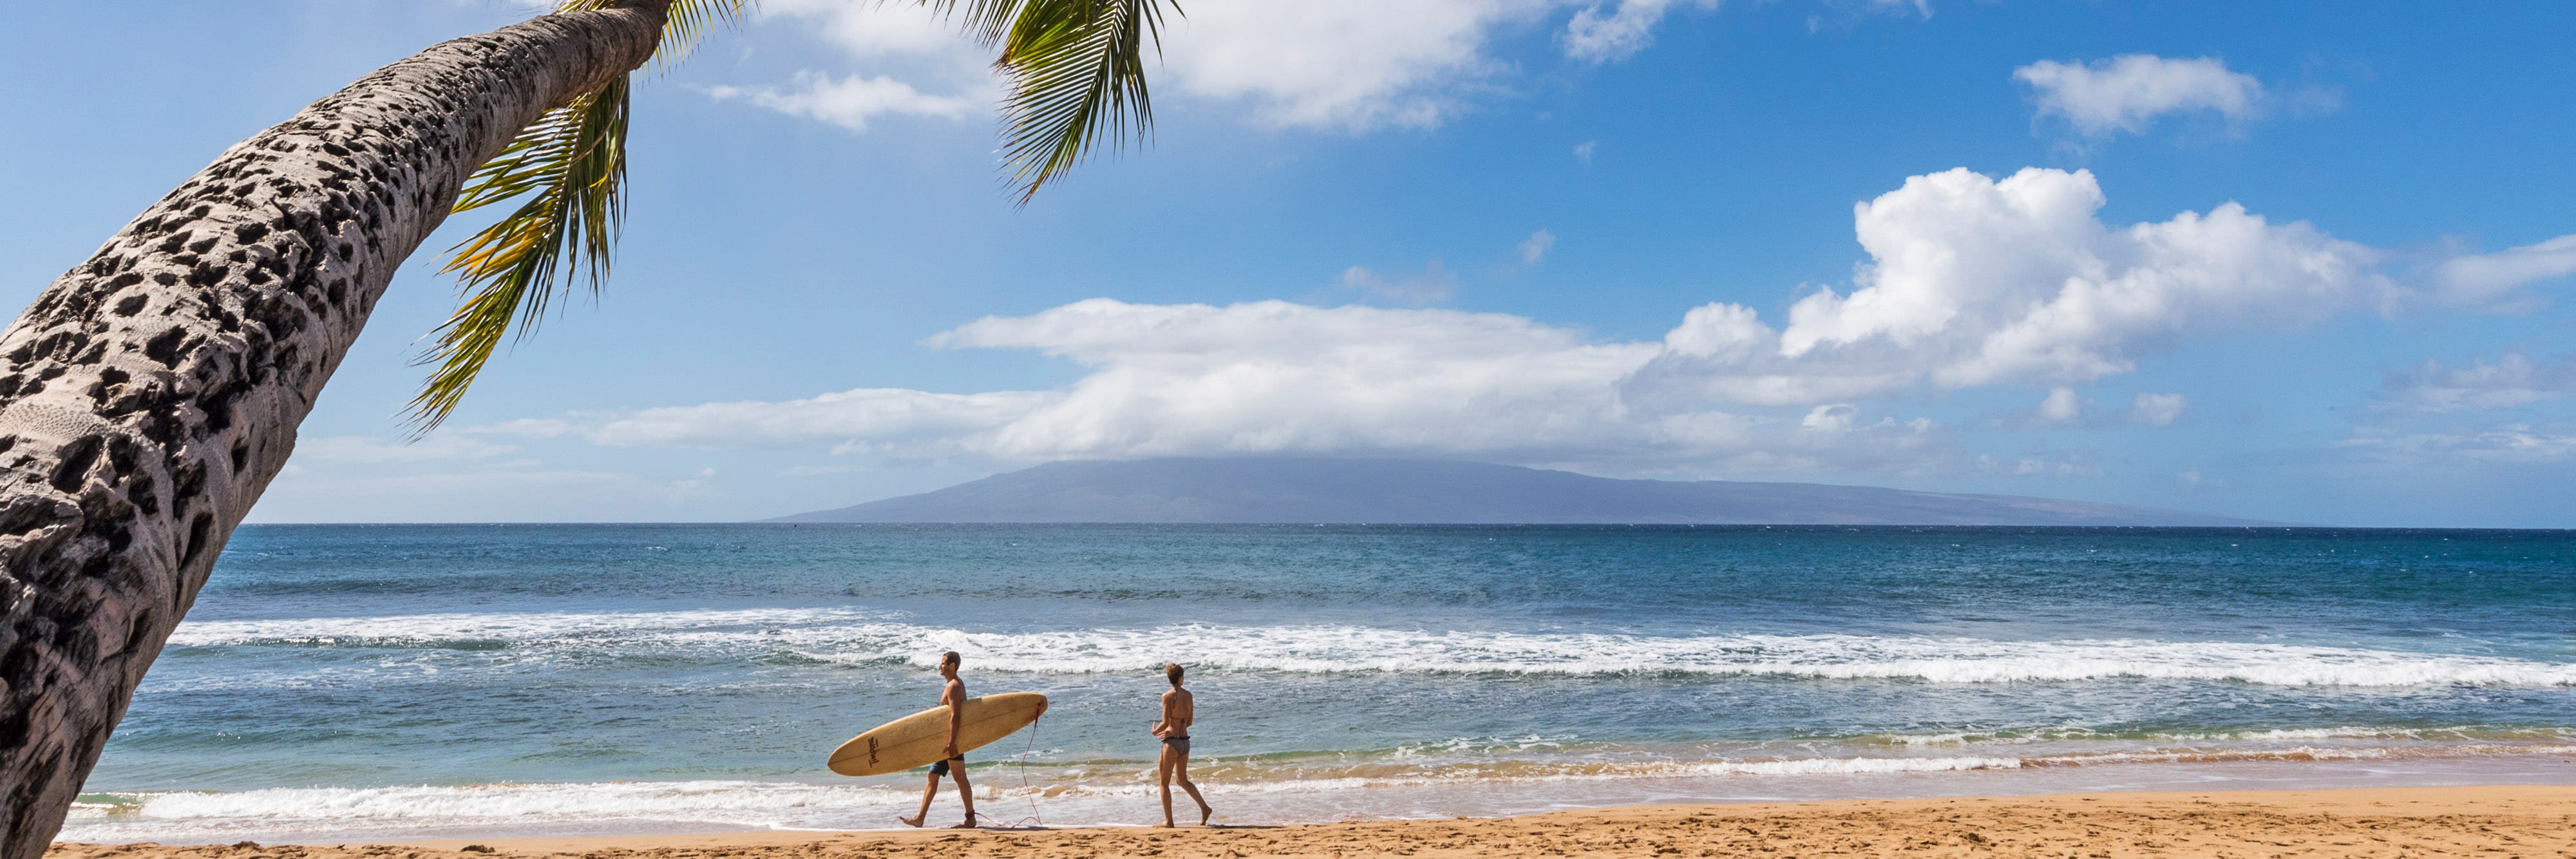 Hawaii Destination- Maui beach